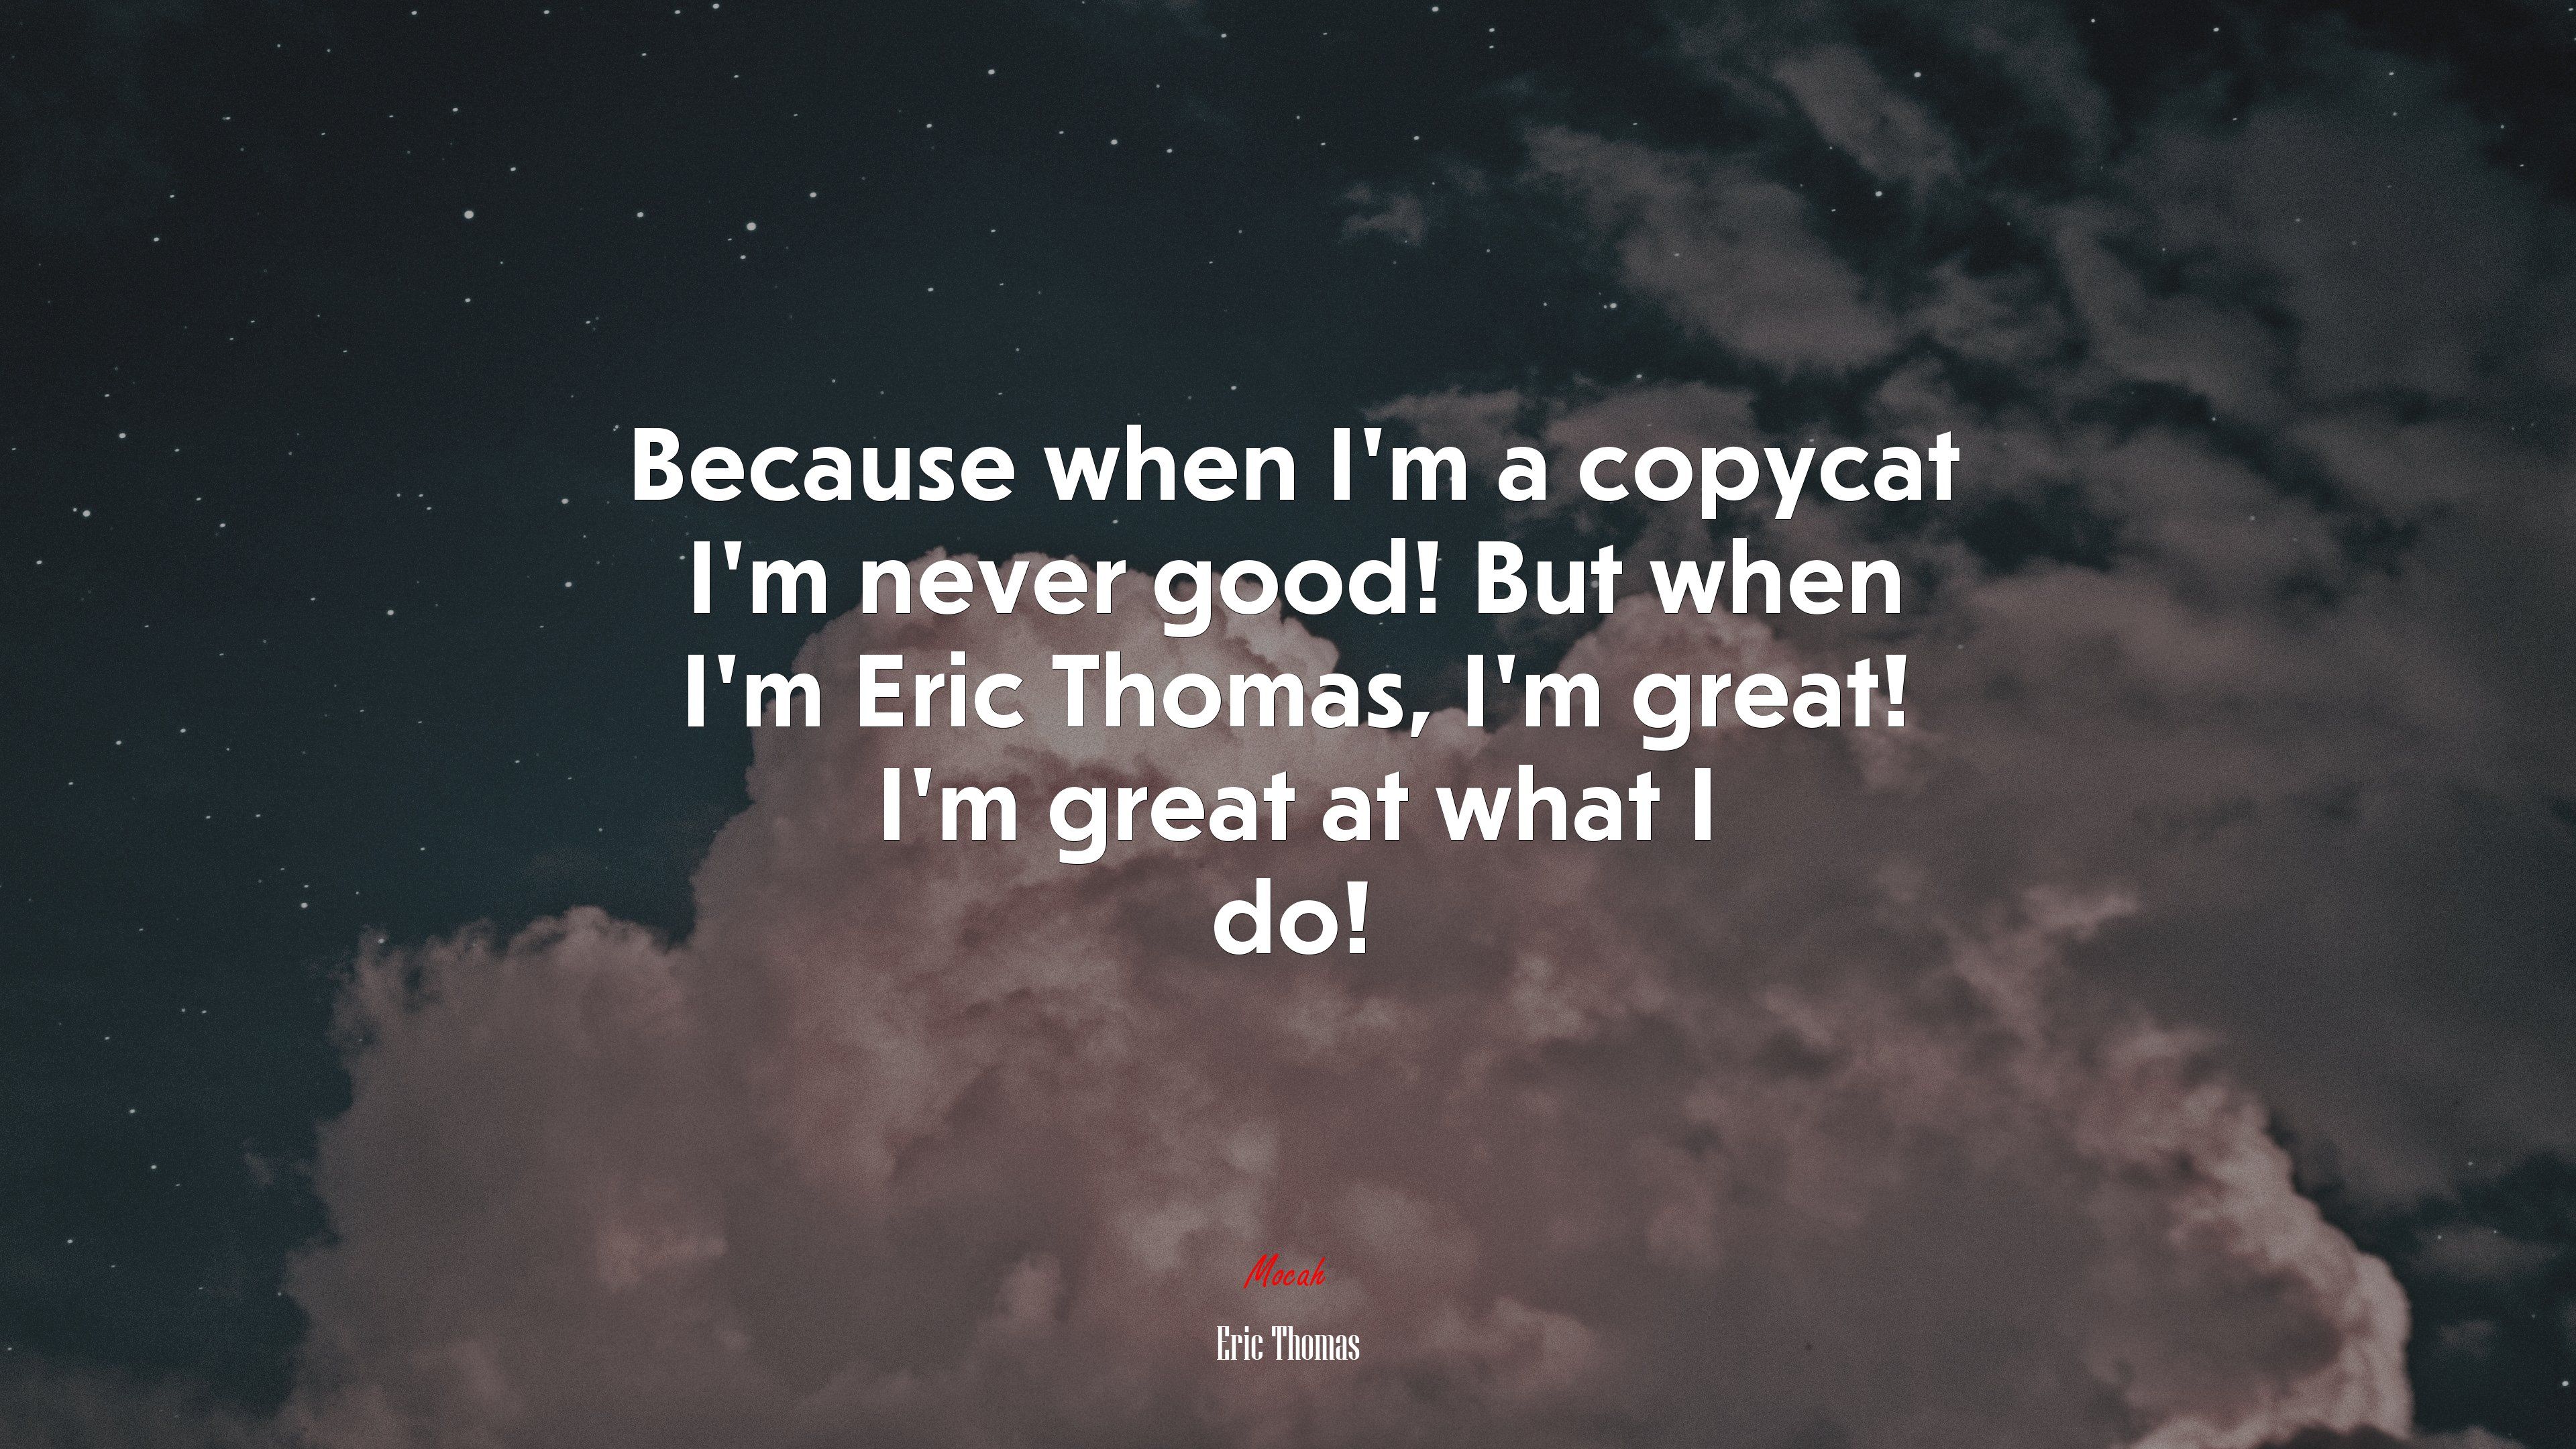 Because when I'm a copycat I'm never good! But when I'm Eric Thomas, I'm great! I'm great at what I do!. Eric Thomas quote, 4k wallpaper. Mocah.org HD Desktop